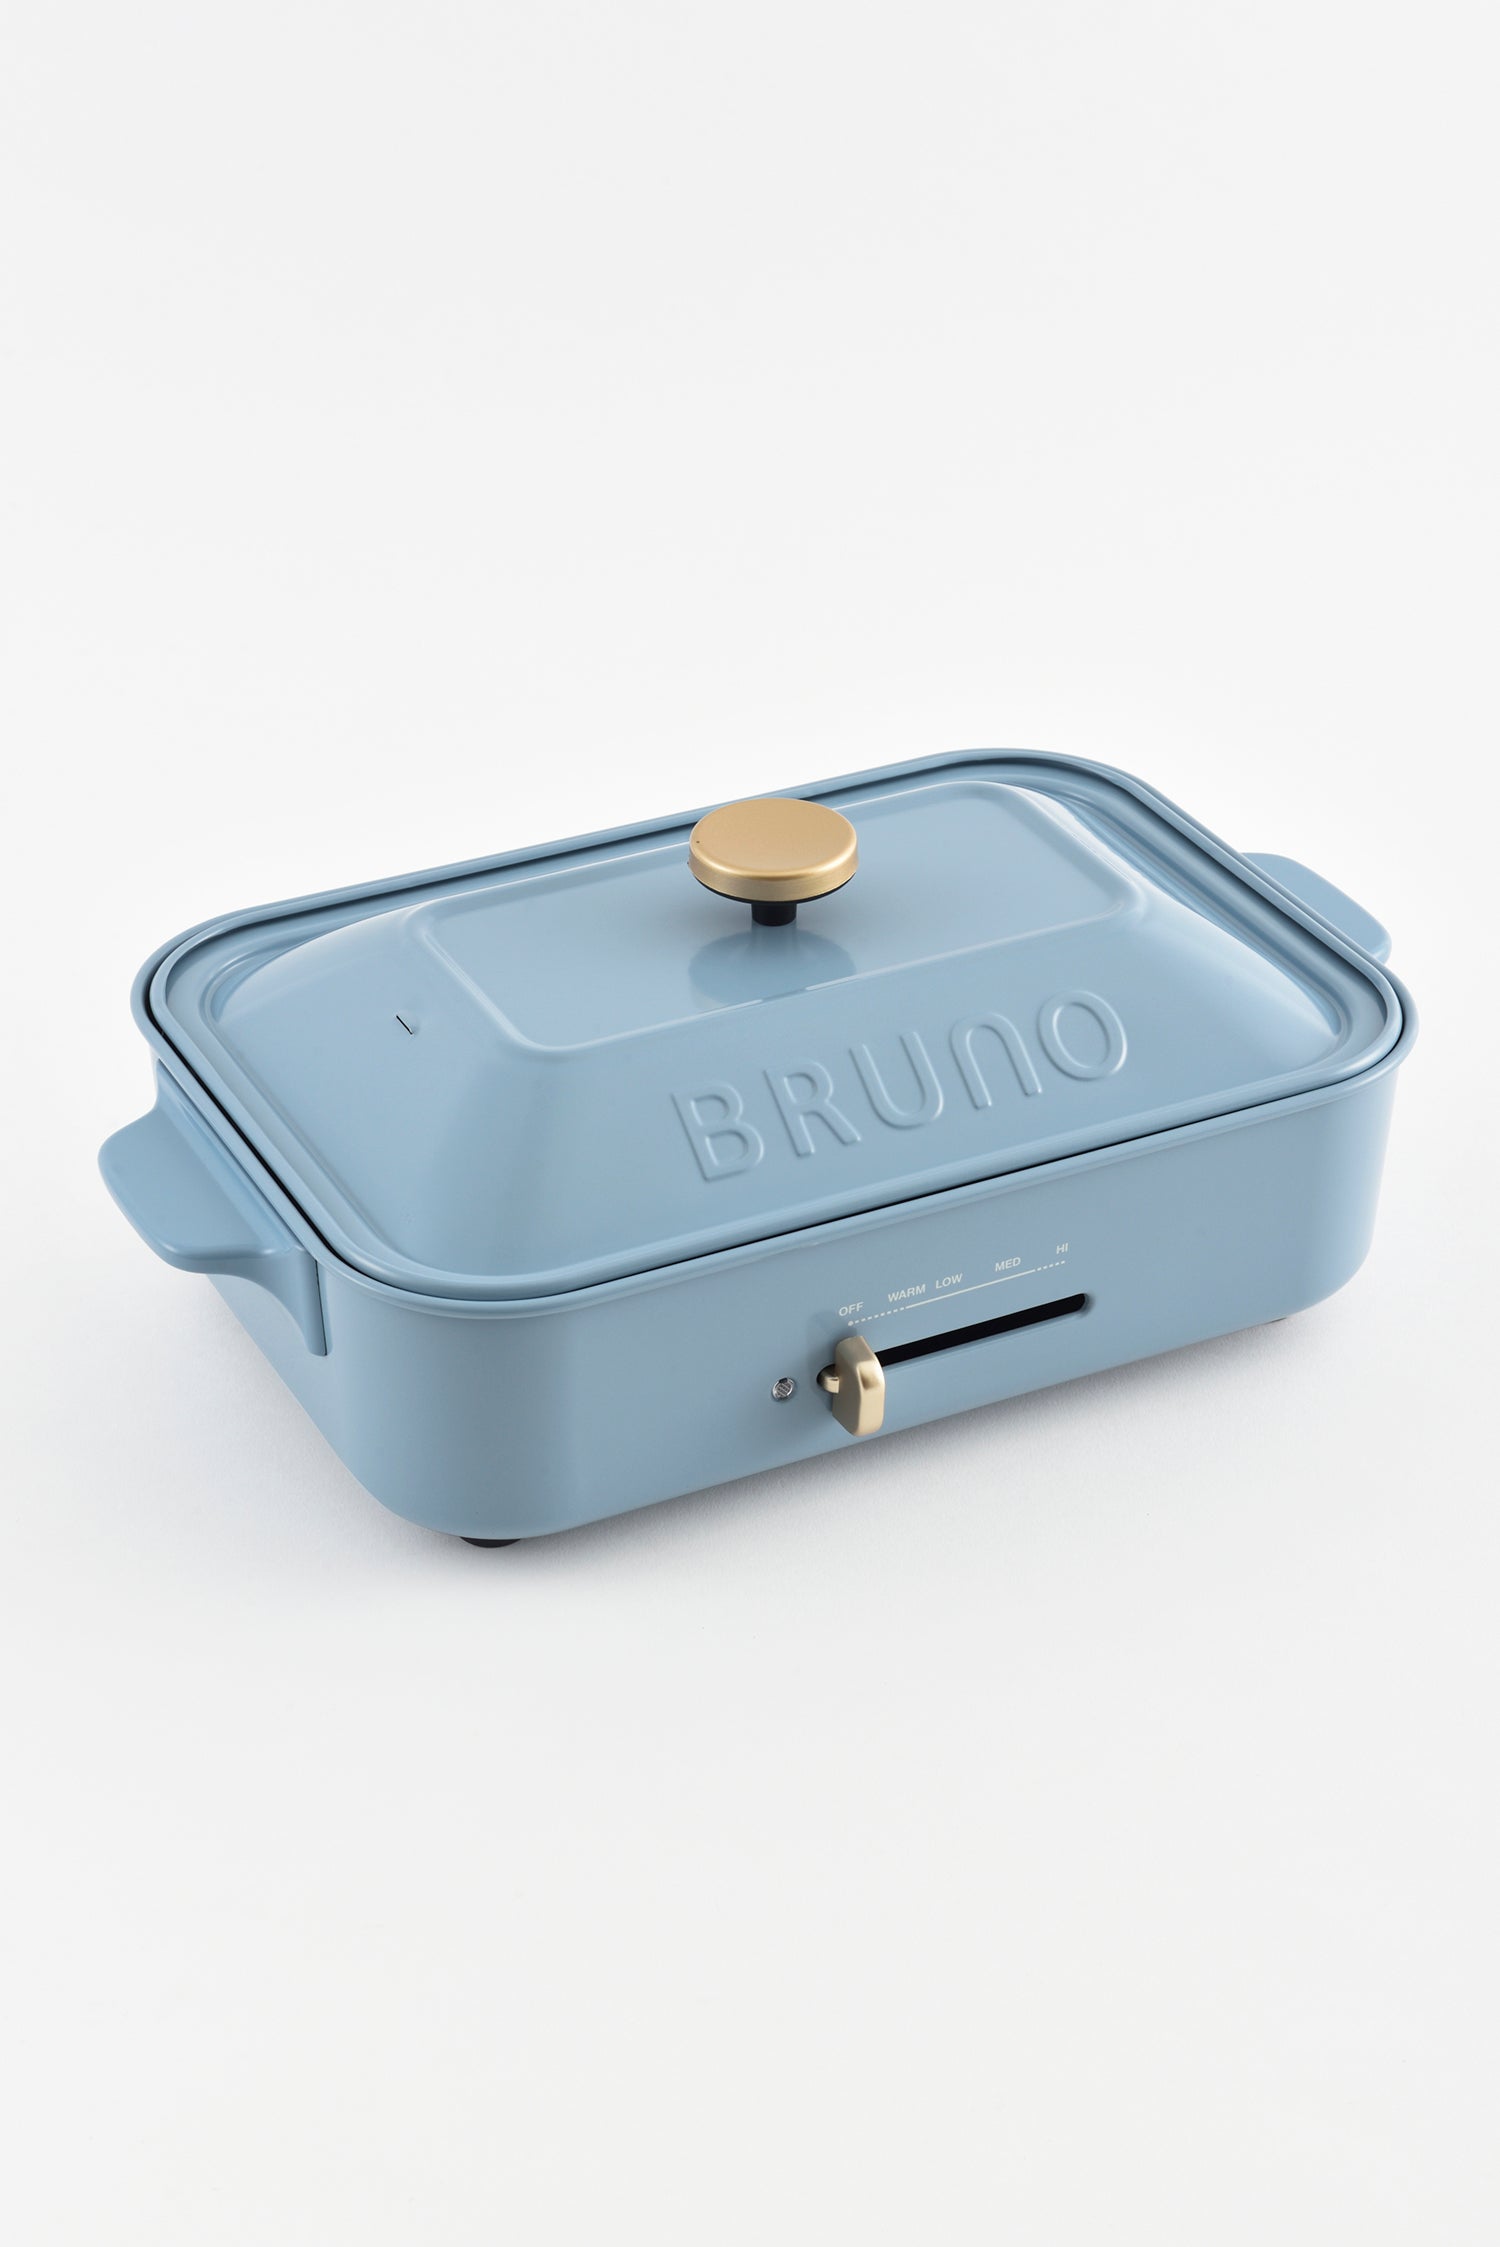 BRUNO 多功能電熱鍋 - 藍色 BOE021-POBL (預訂 4 月底到貨)